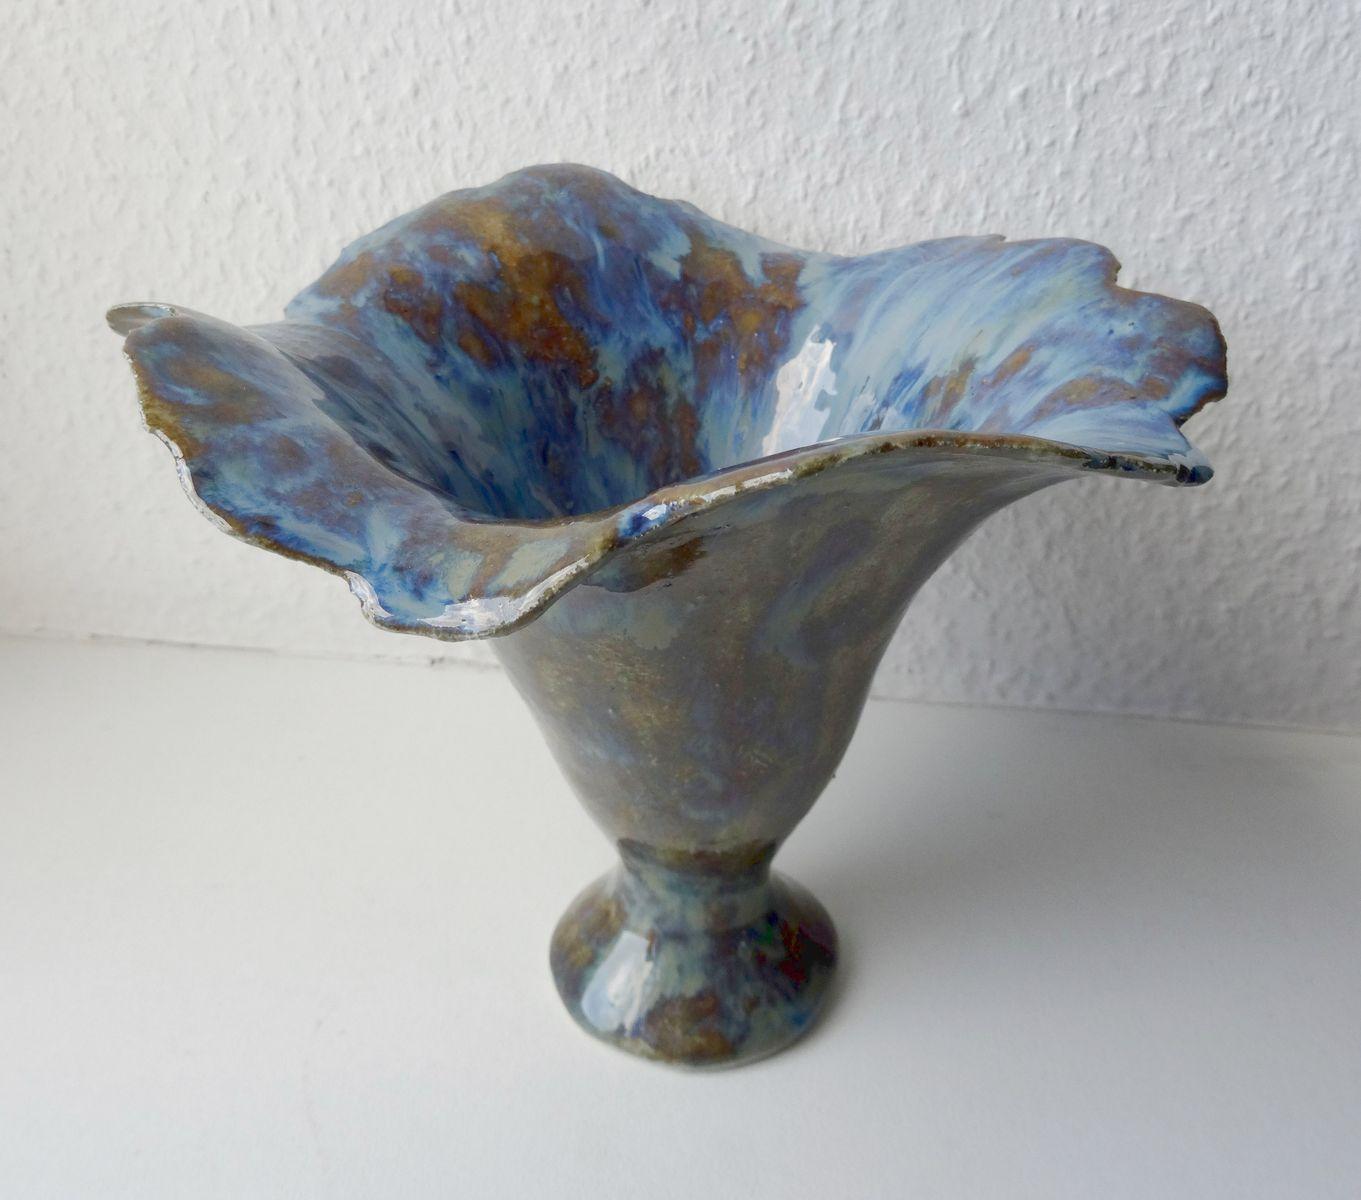 Vase blue flower. 2017. Stone mass, h 13 cm, diam. 15.5 cm - Art by Elina Titane 